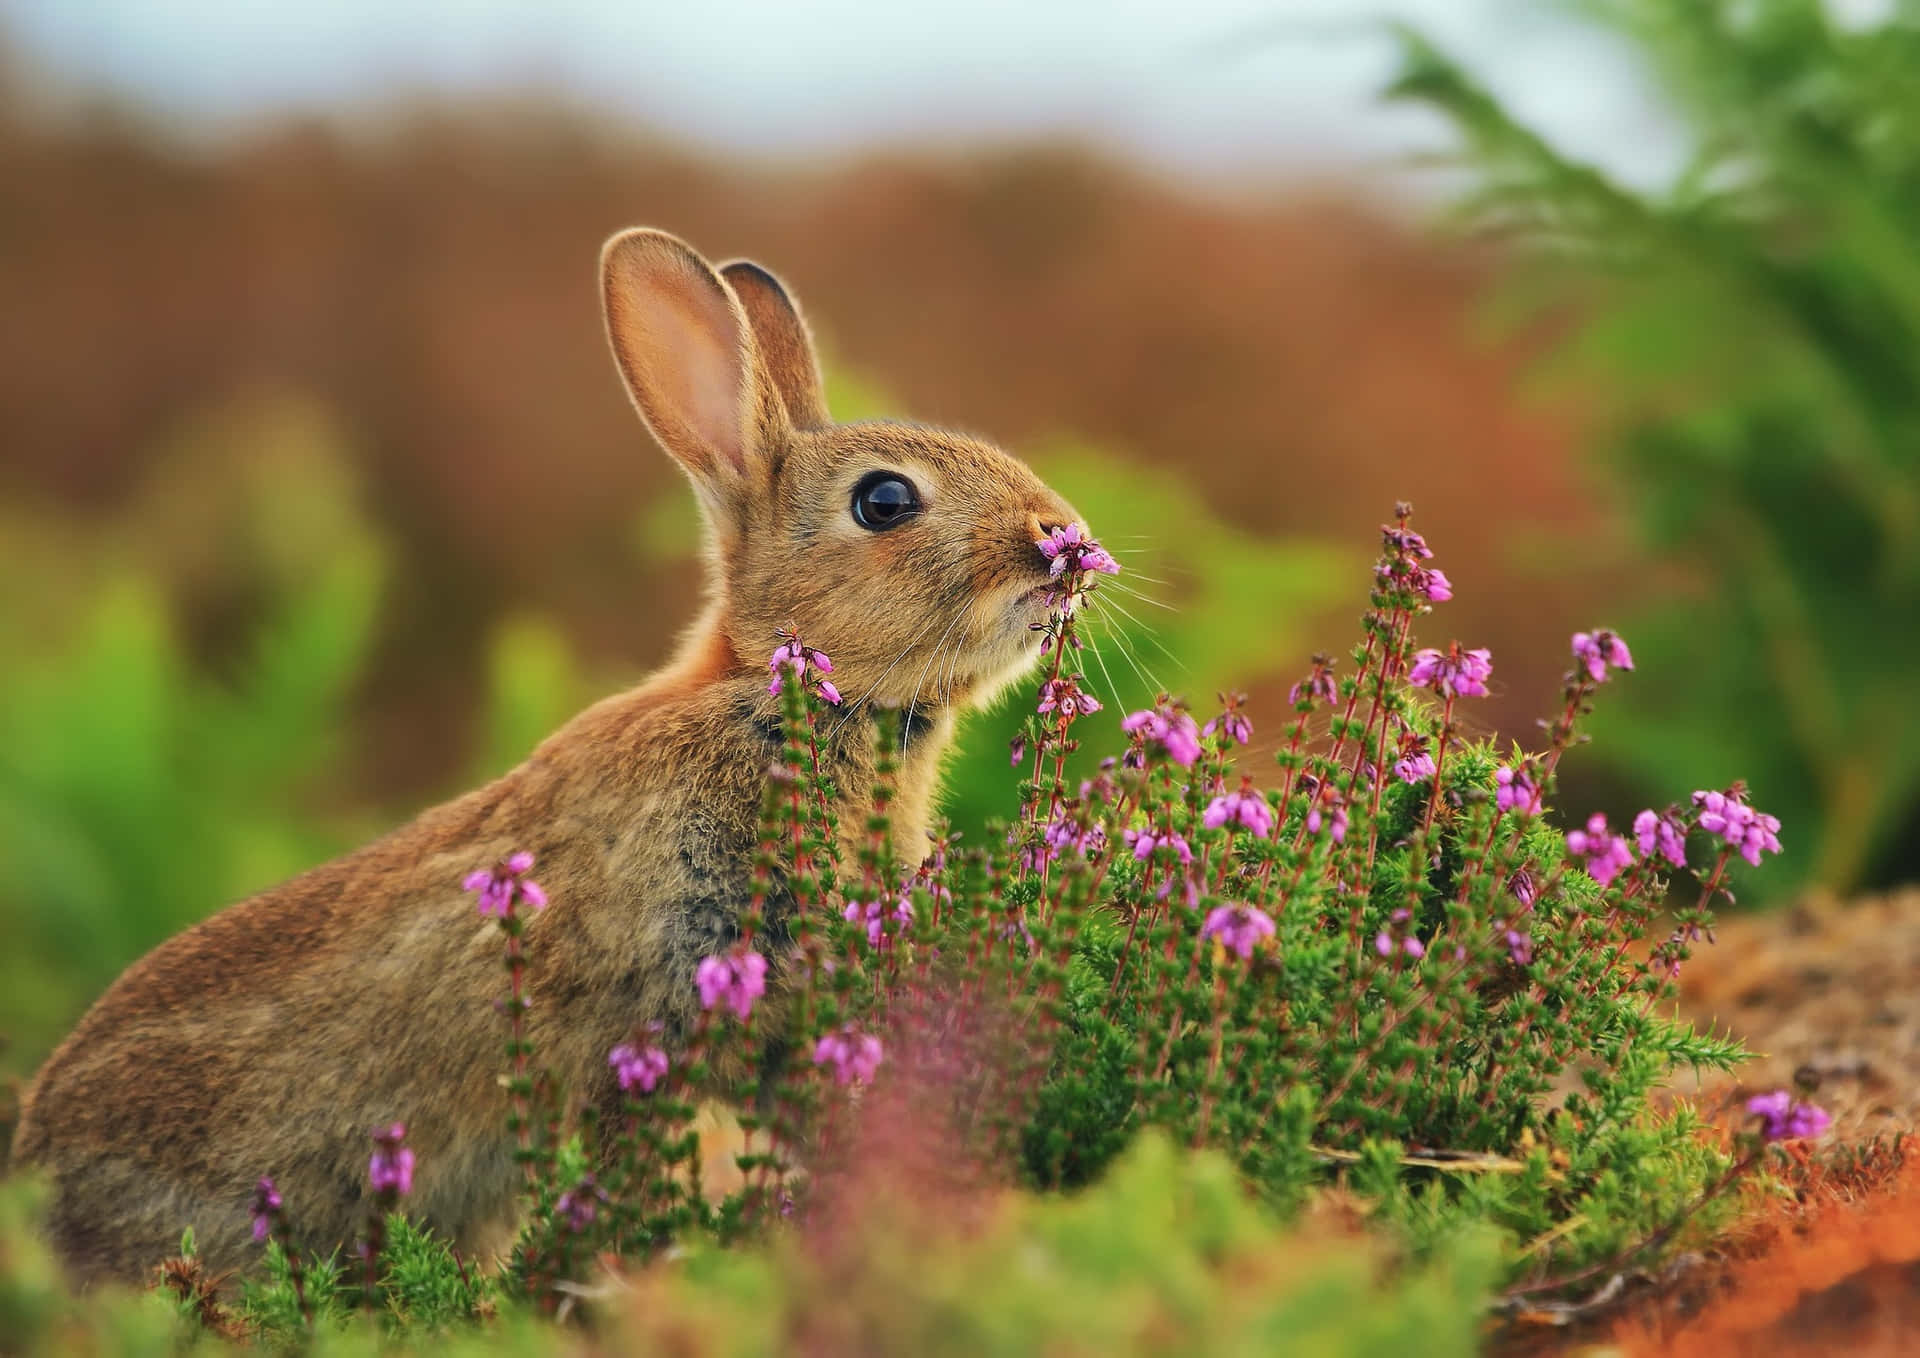 Wild Rabbit Among Flowers.jpg Wallpaper